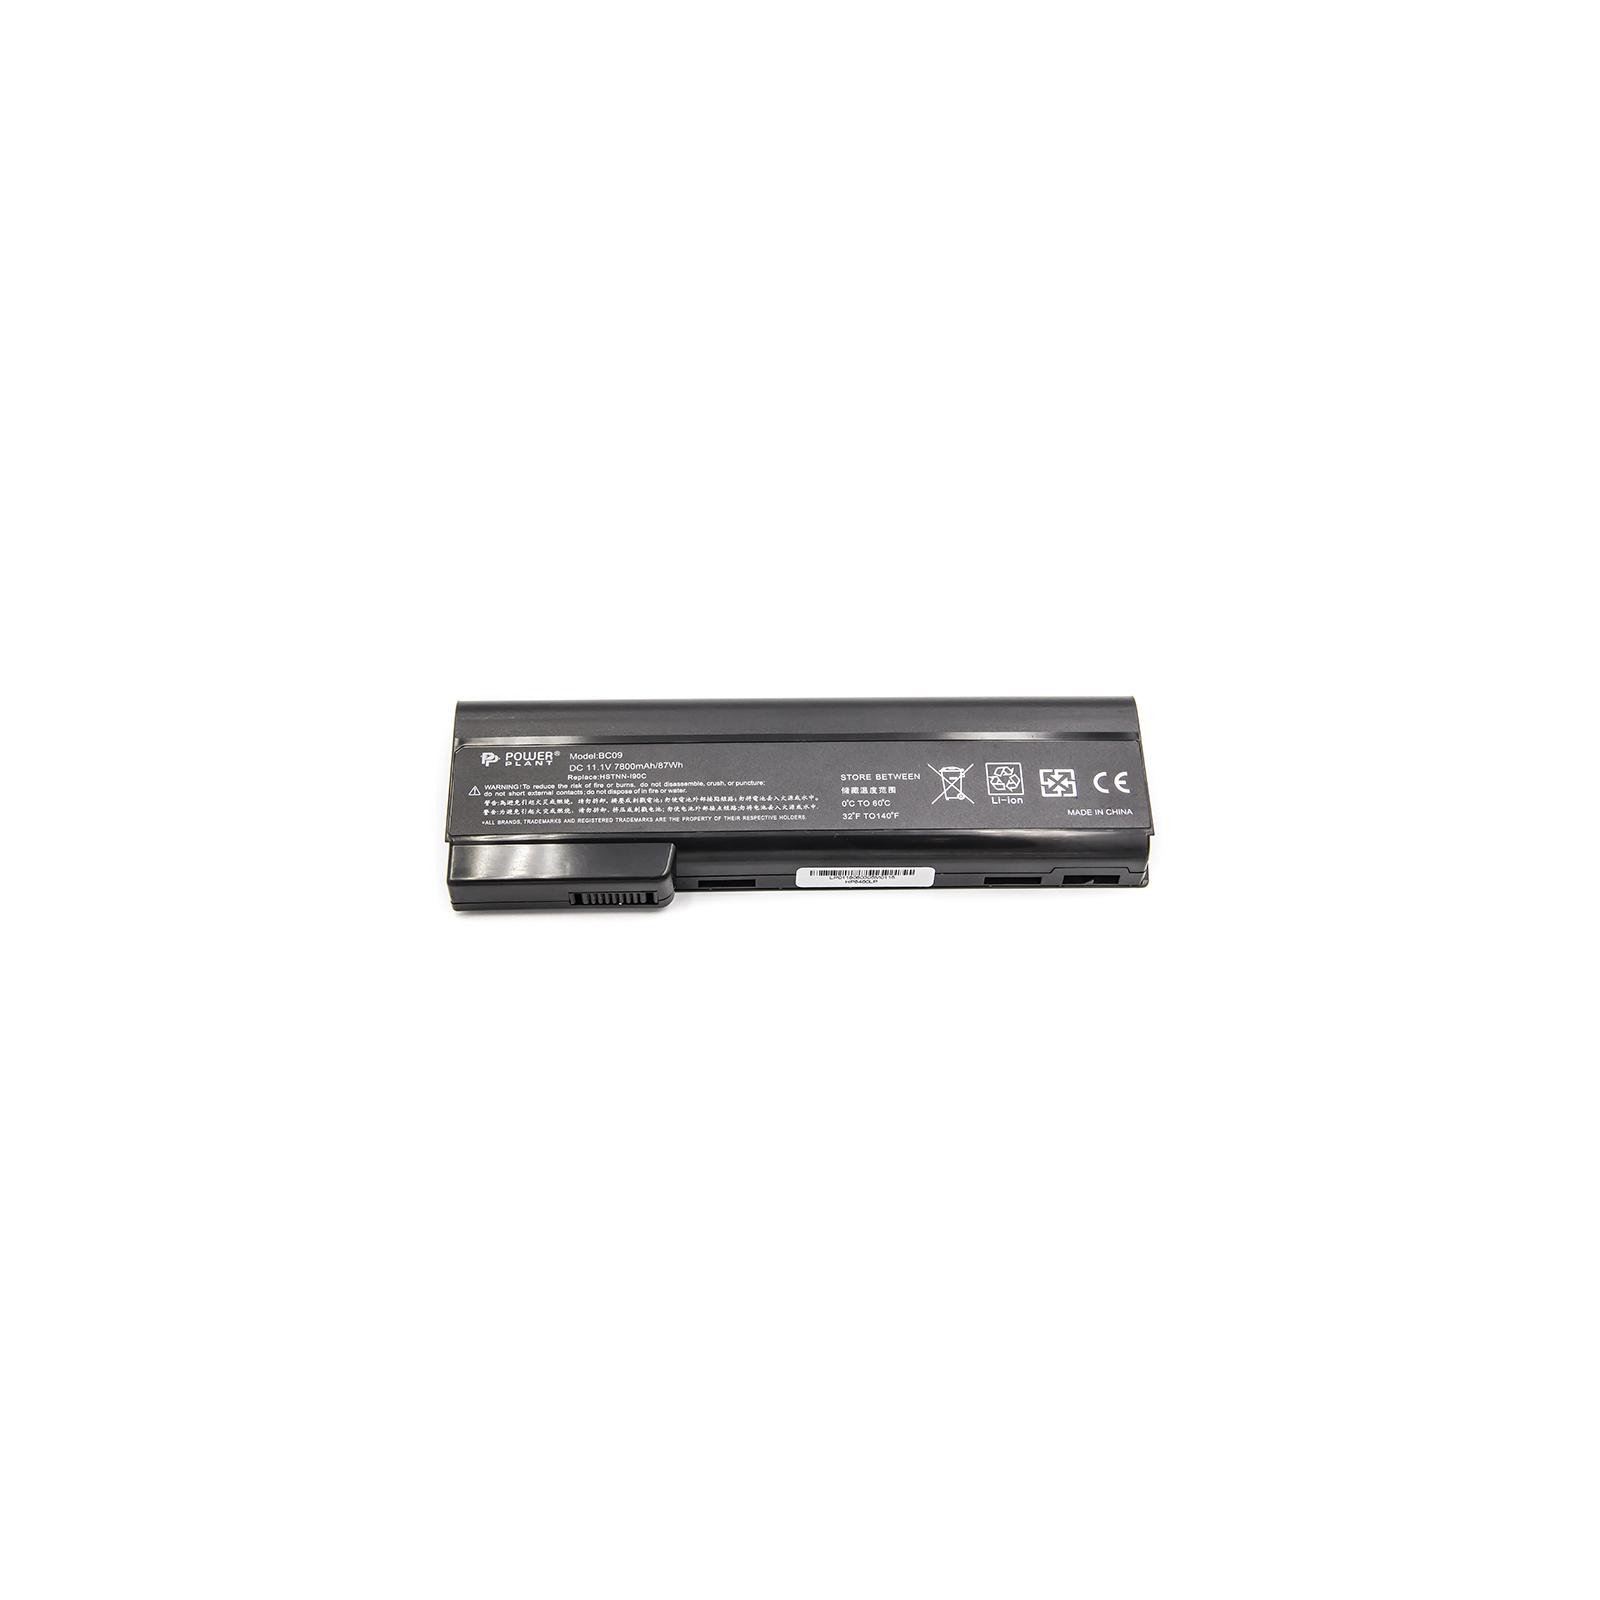 Аккумулятор для ноутбука HP EliteBook 8460w Series (628369-421, HP8460LP) 11.1V 7800m PowerPlant (NB460939) изображение 3